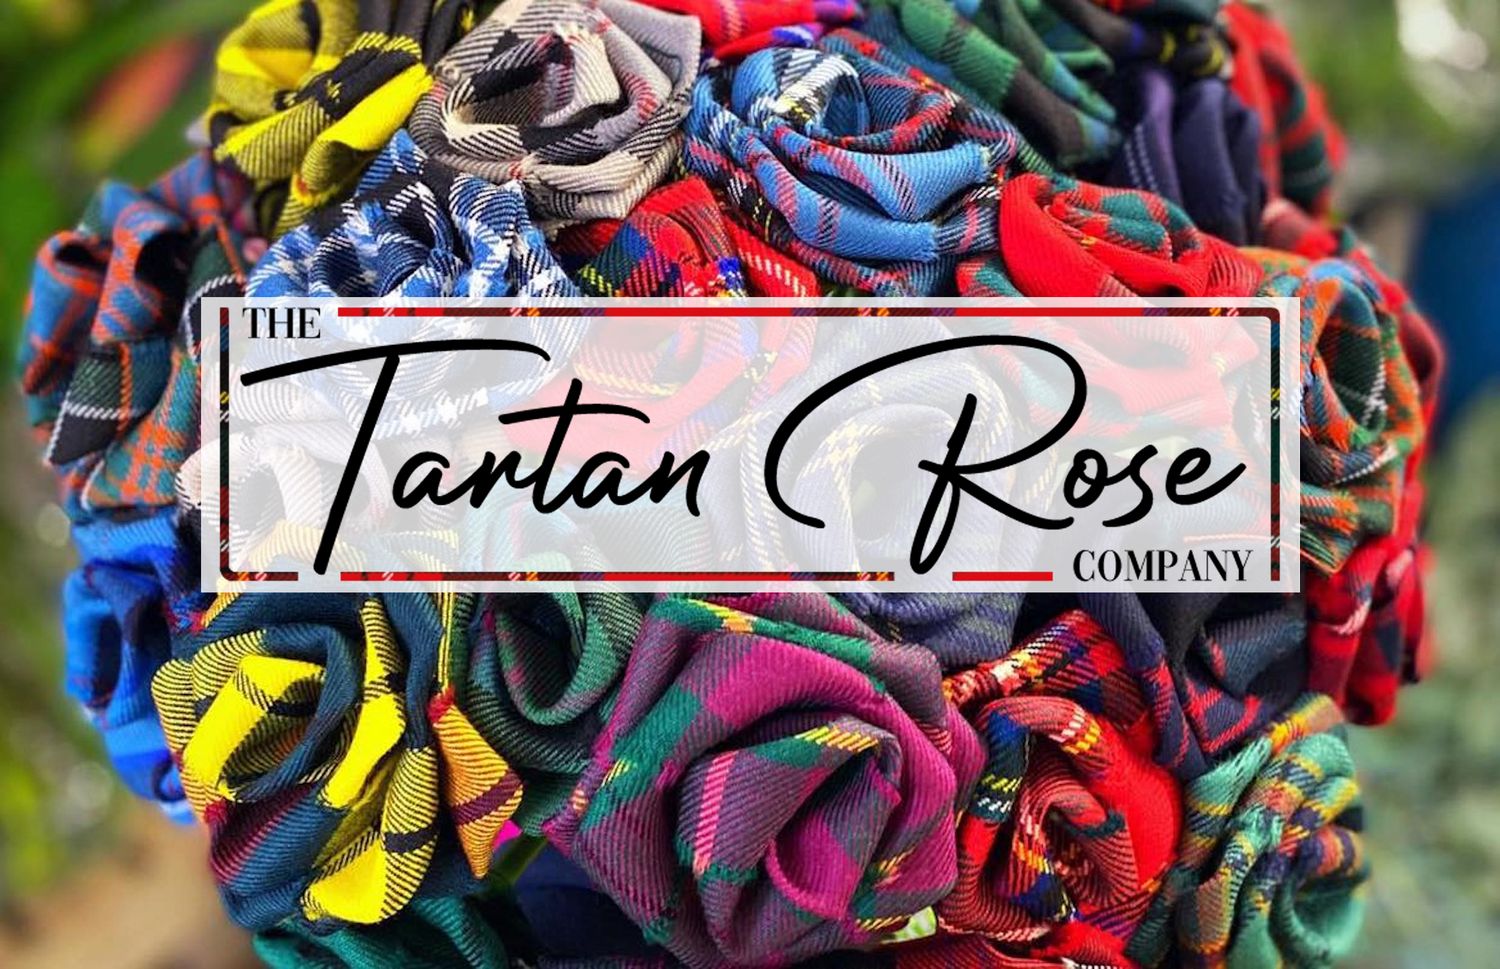 The Tartan Rose Company